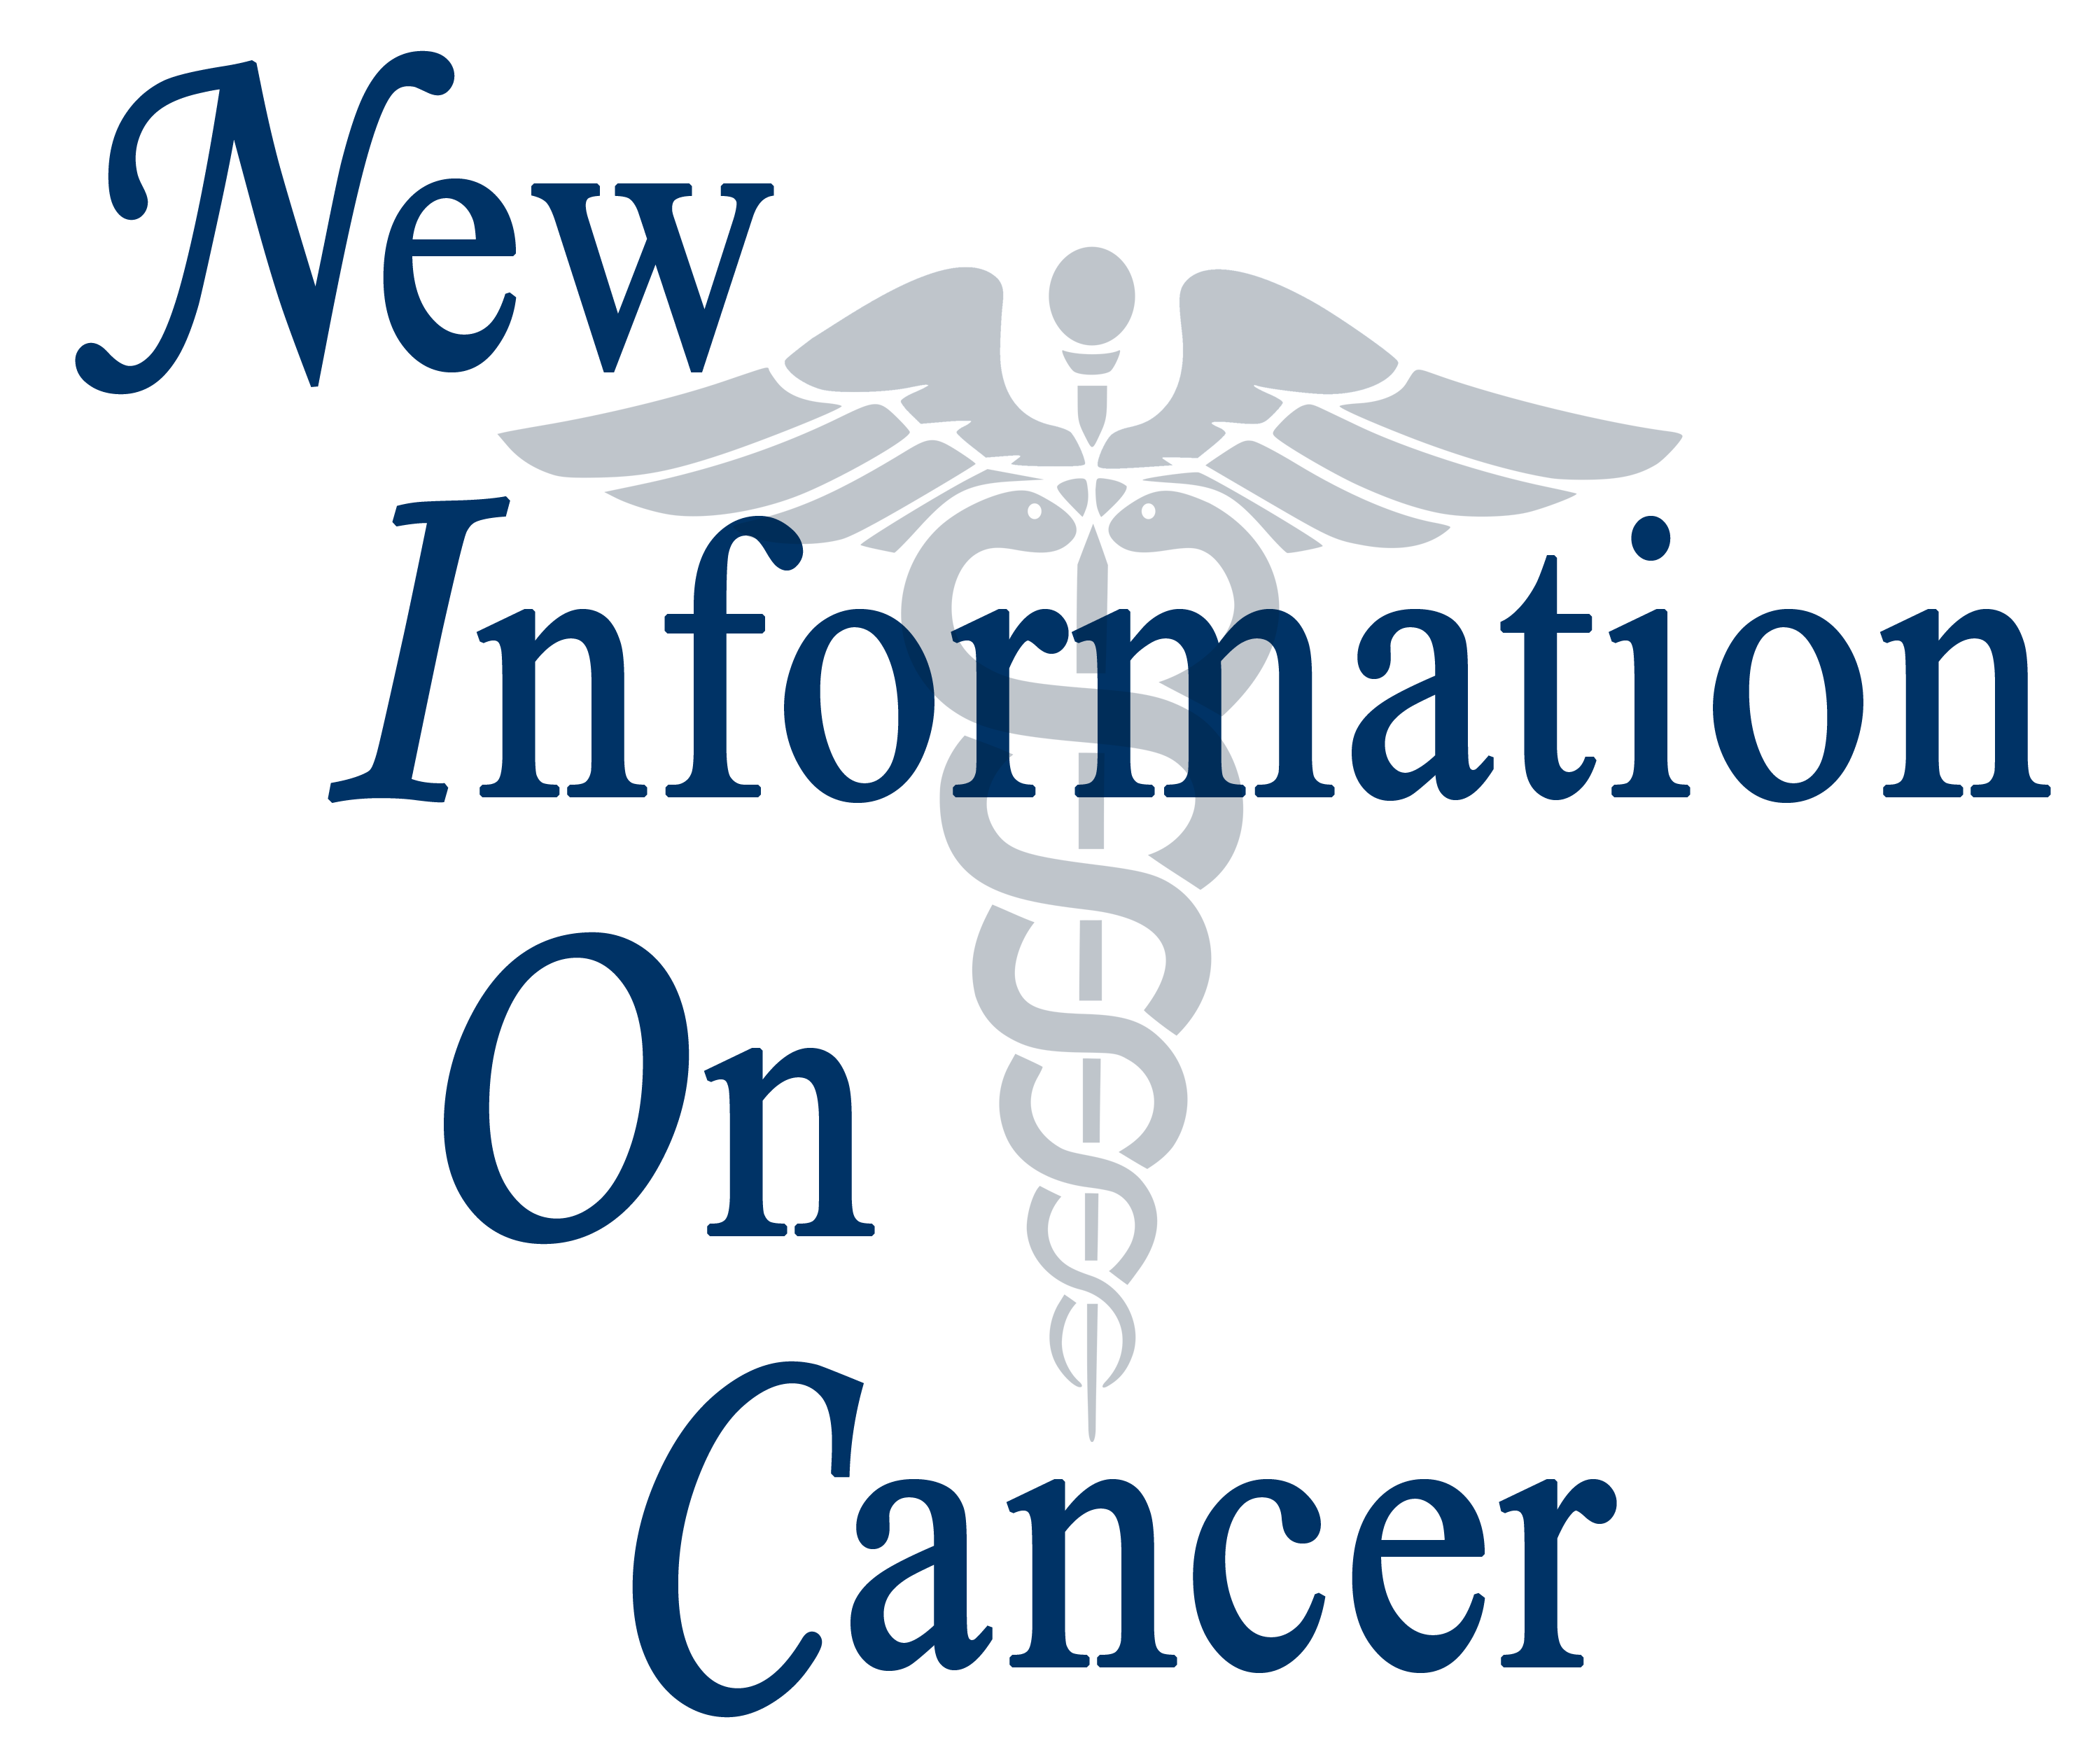 new Information on cancer large logo